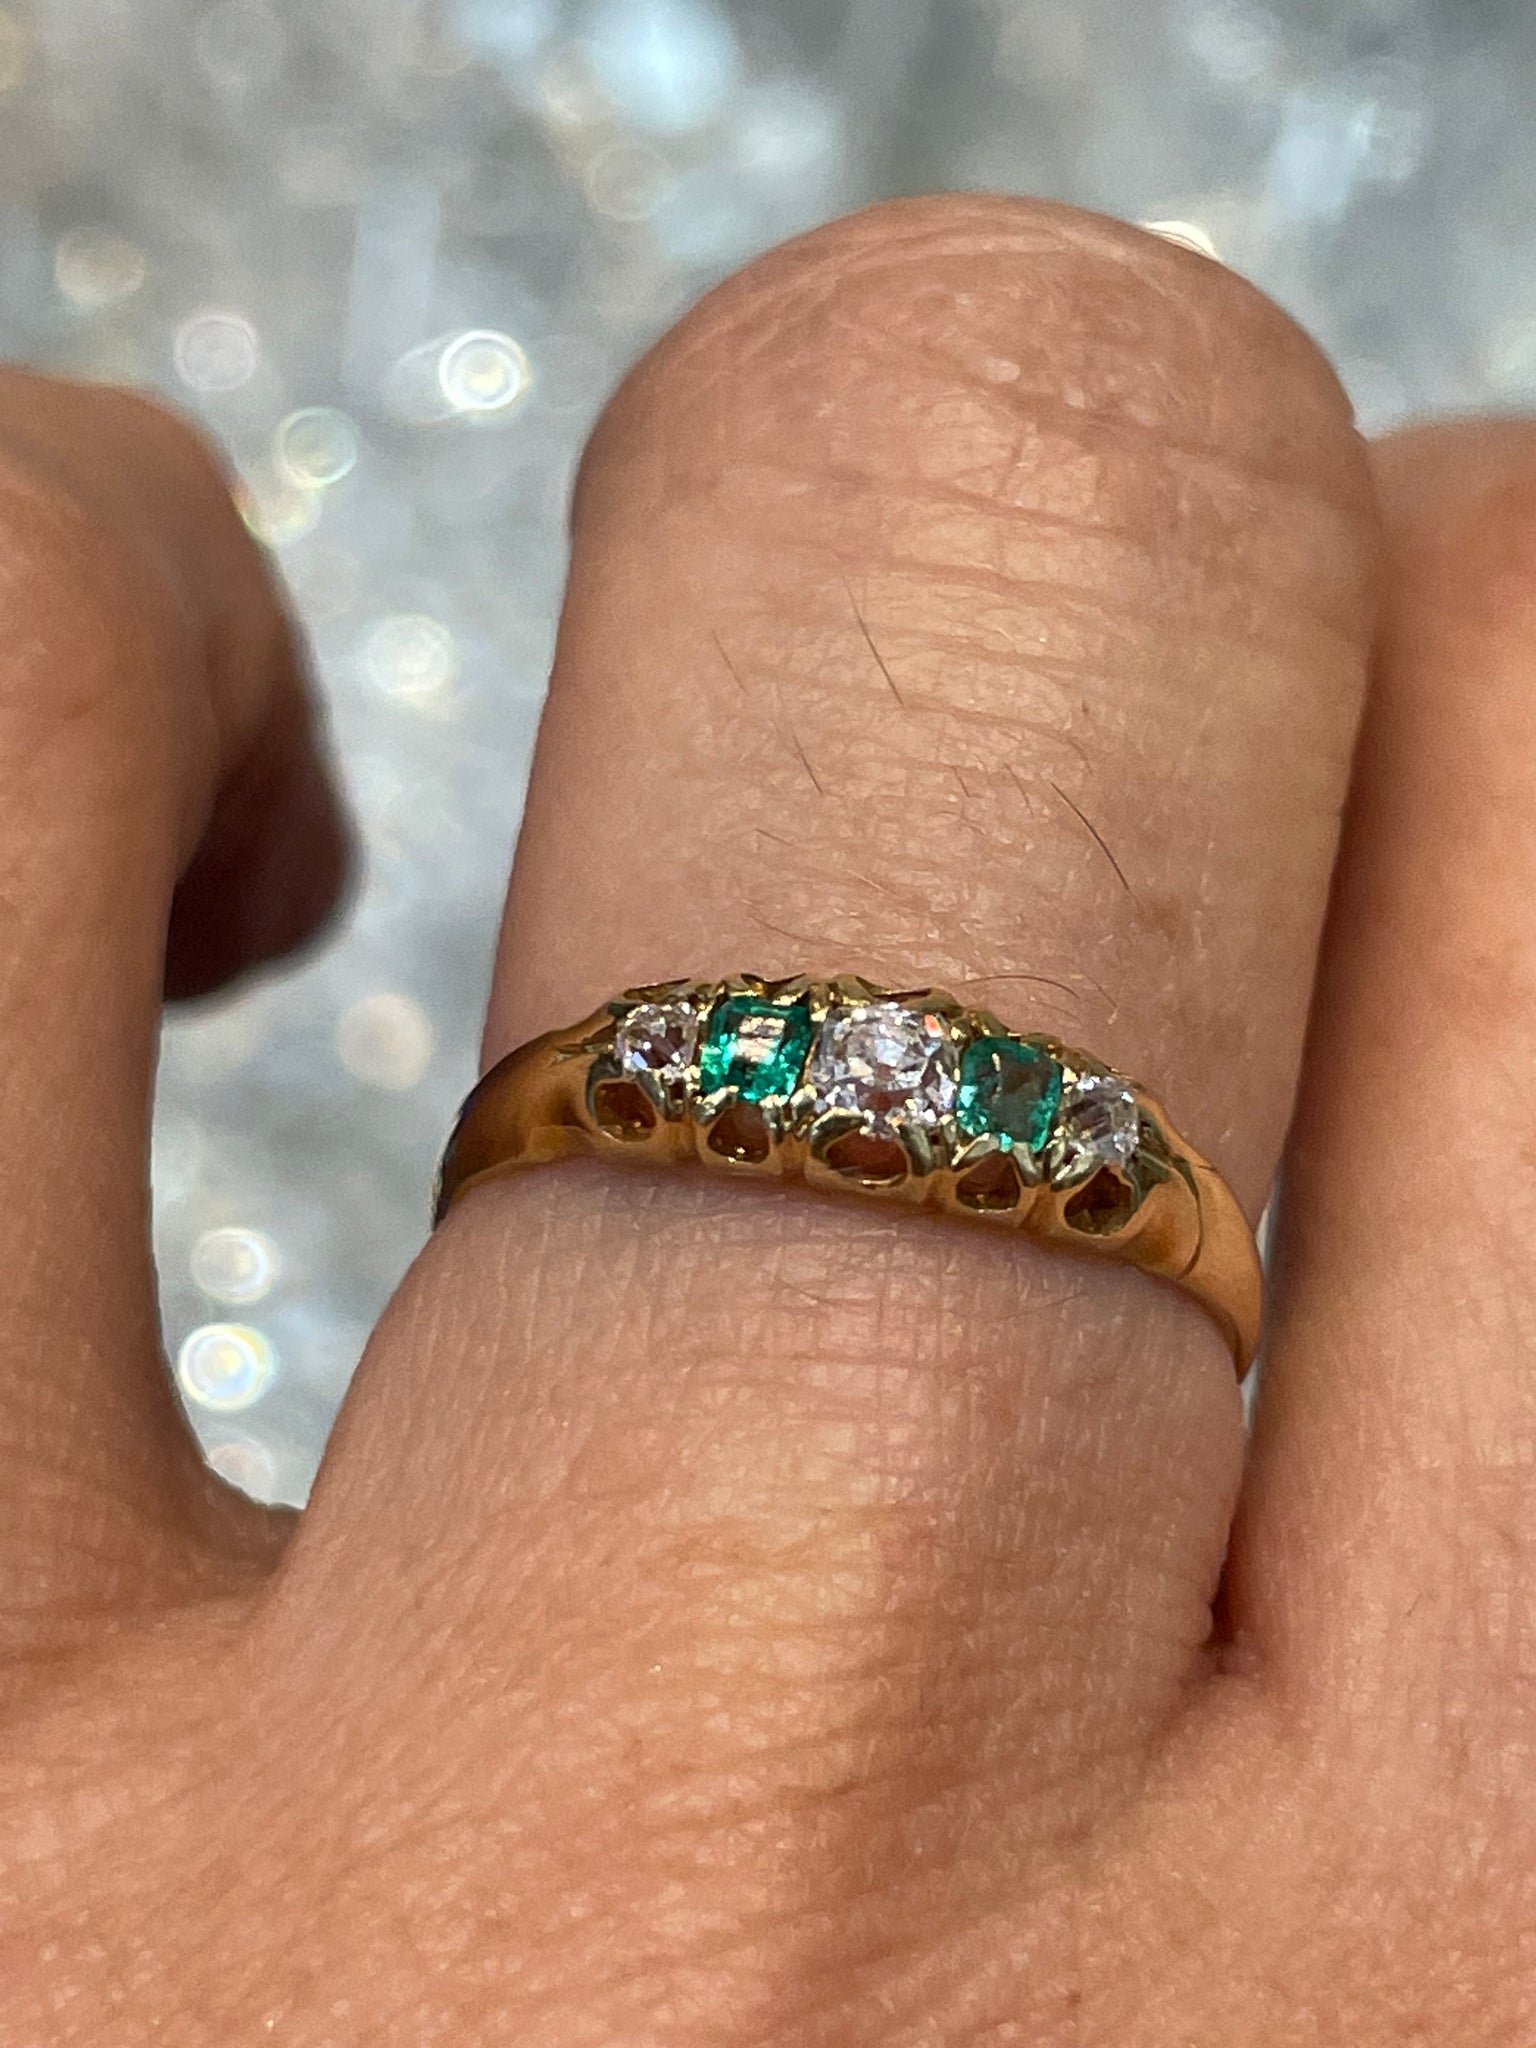 Emerald Vintage Ring